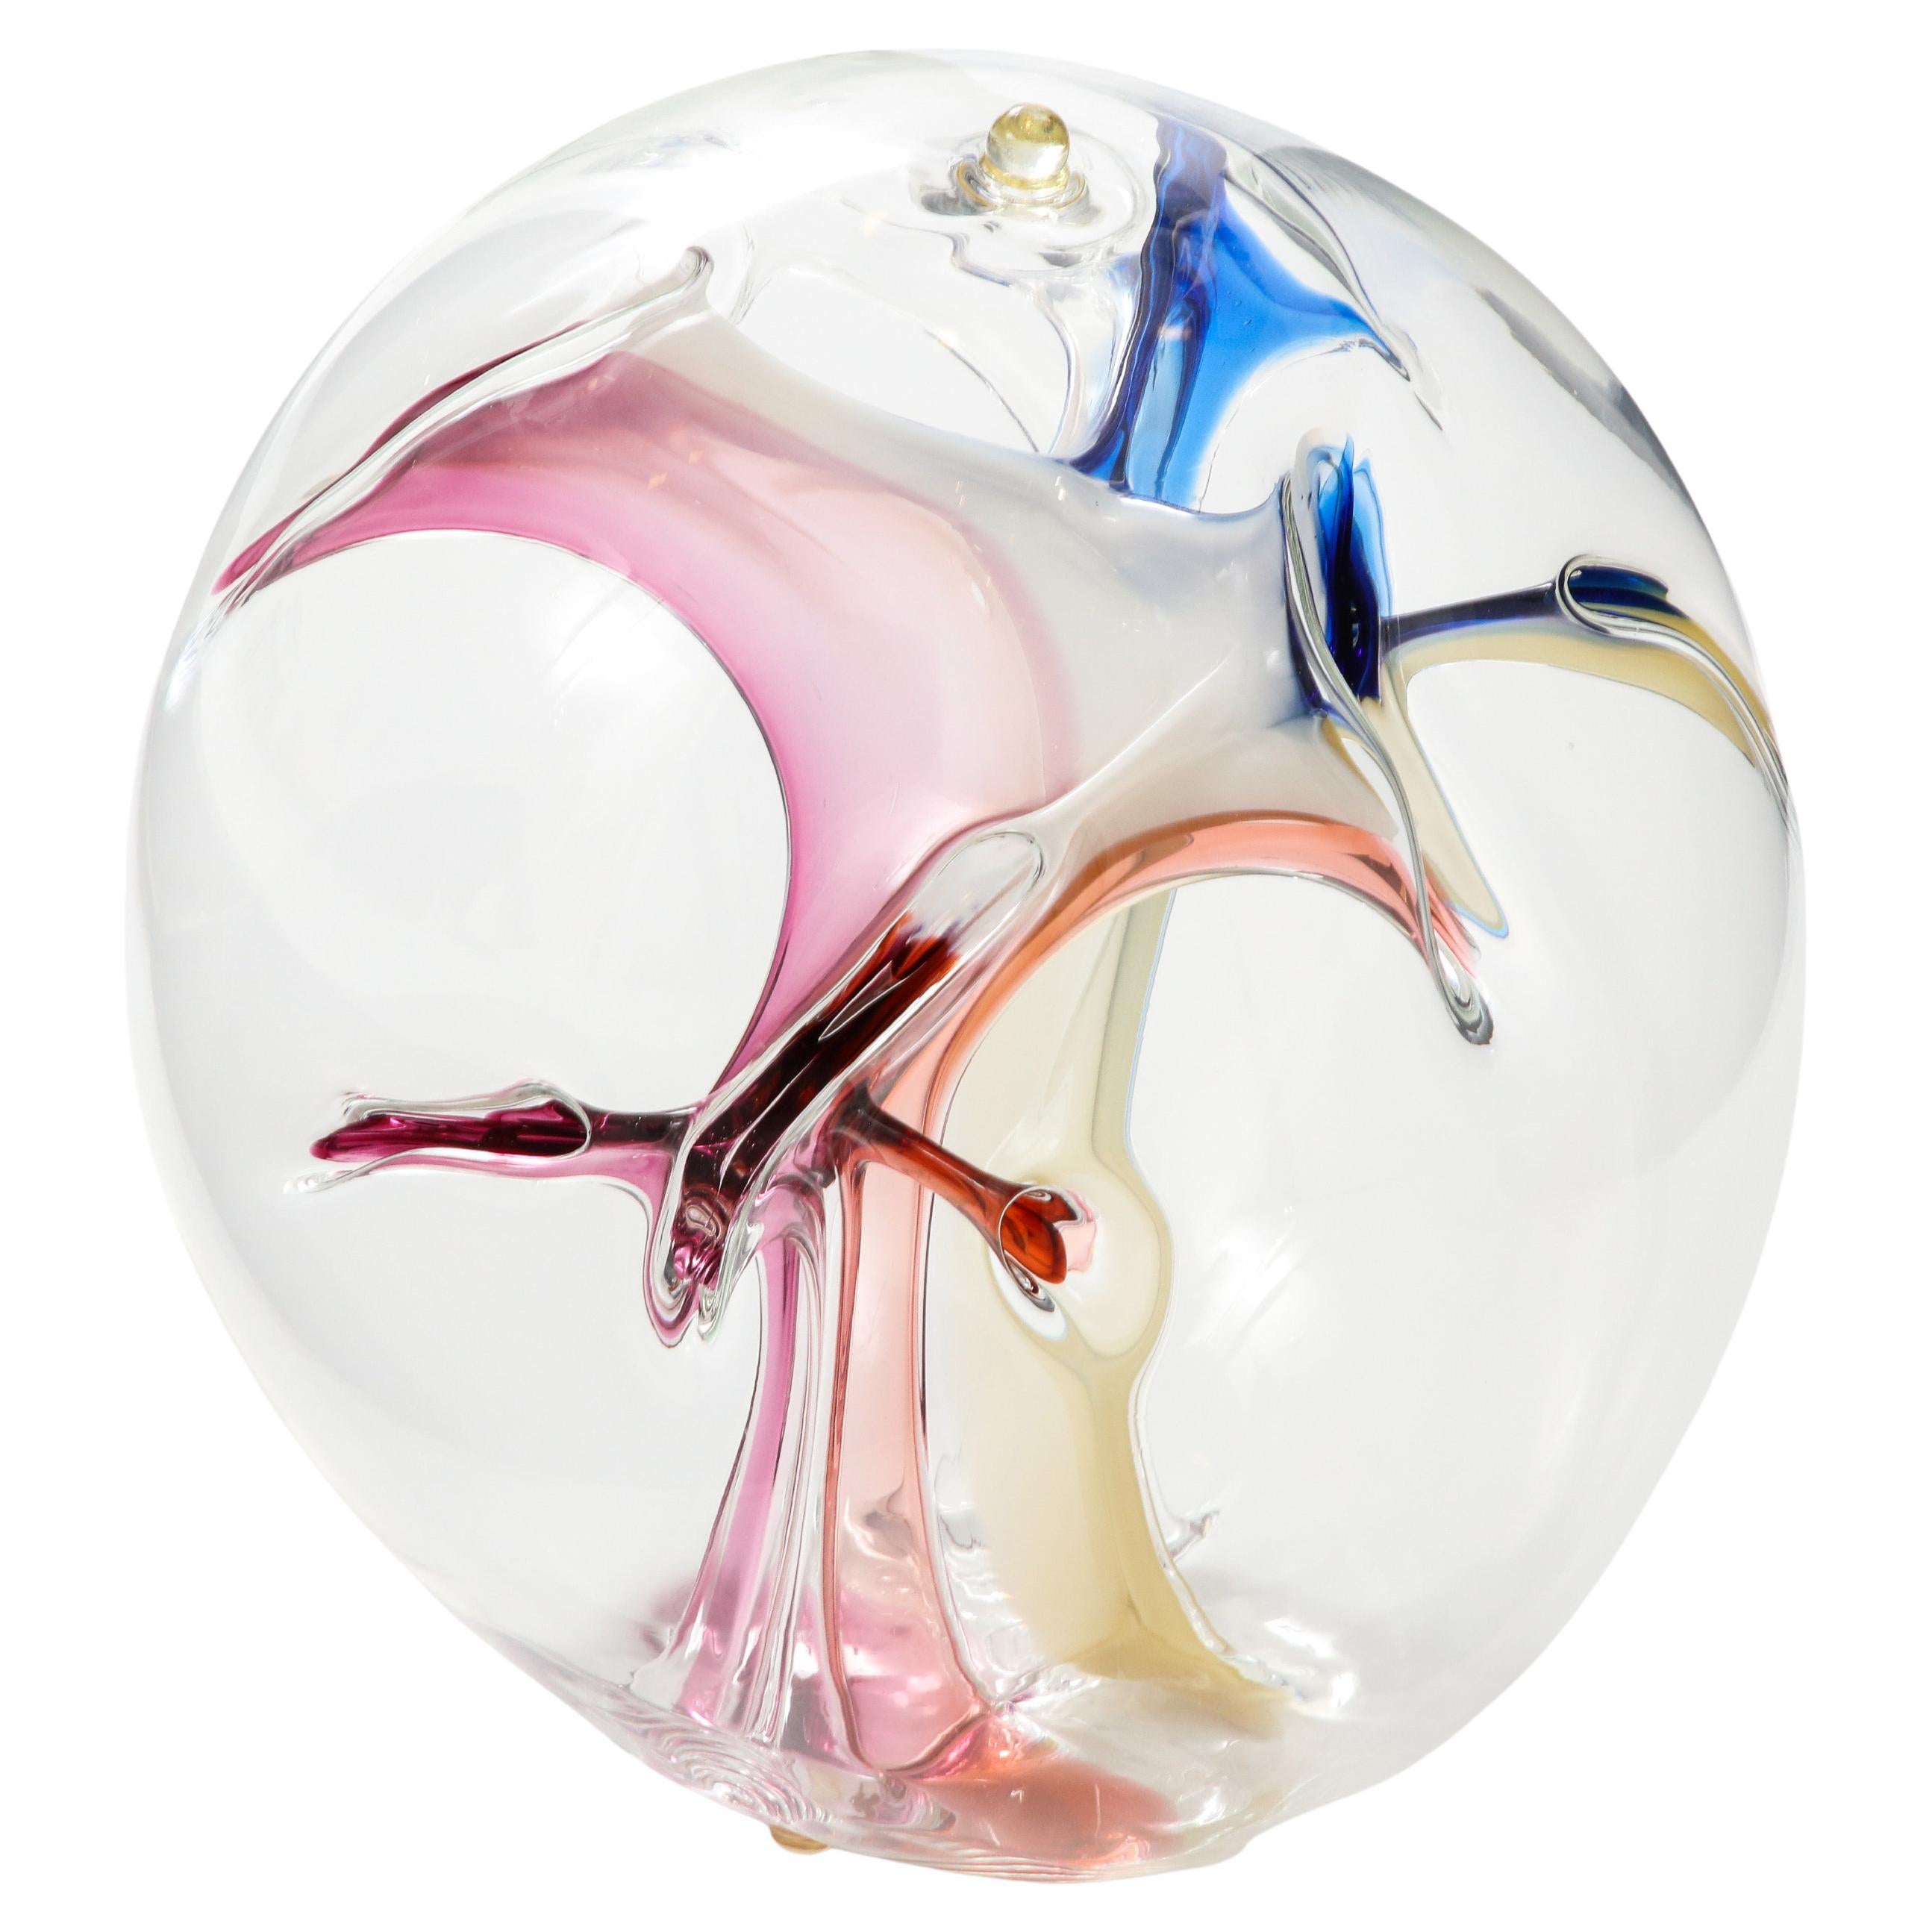 Stunning Peter Bramhall Glass Orb Sculpture For Sale